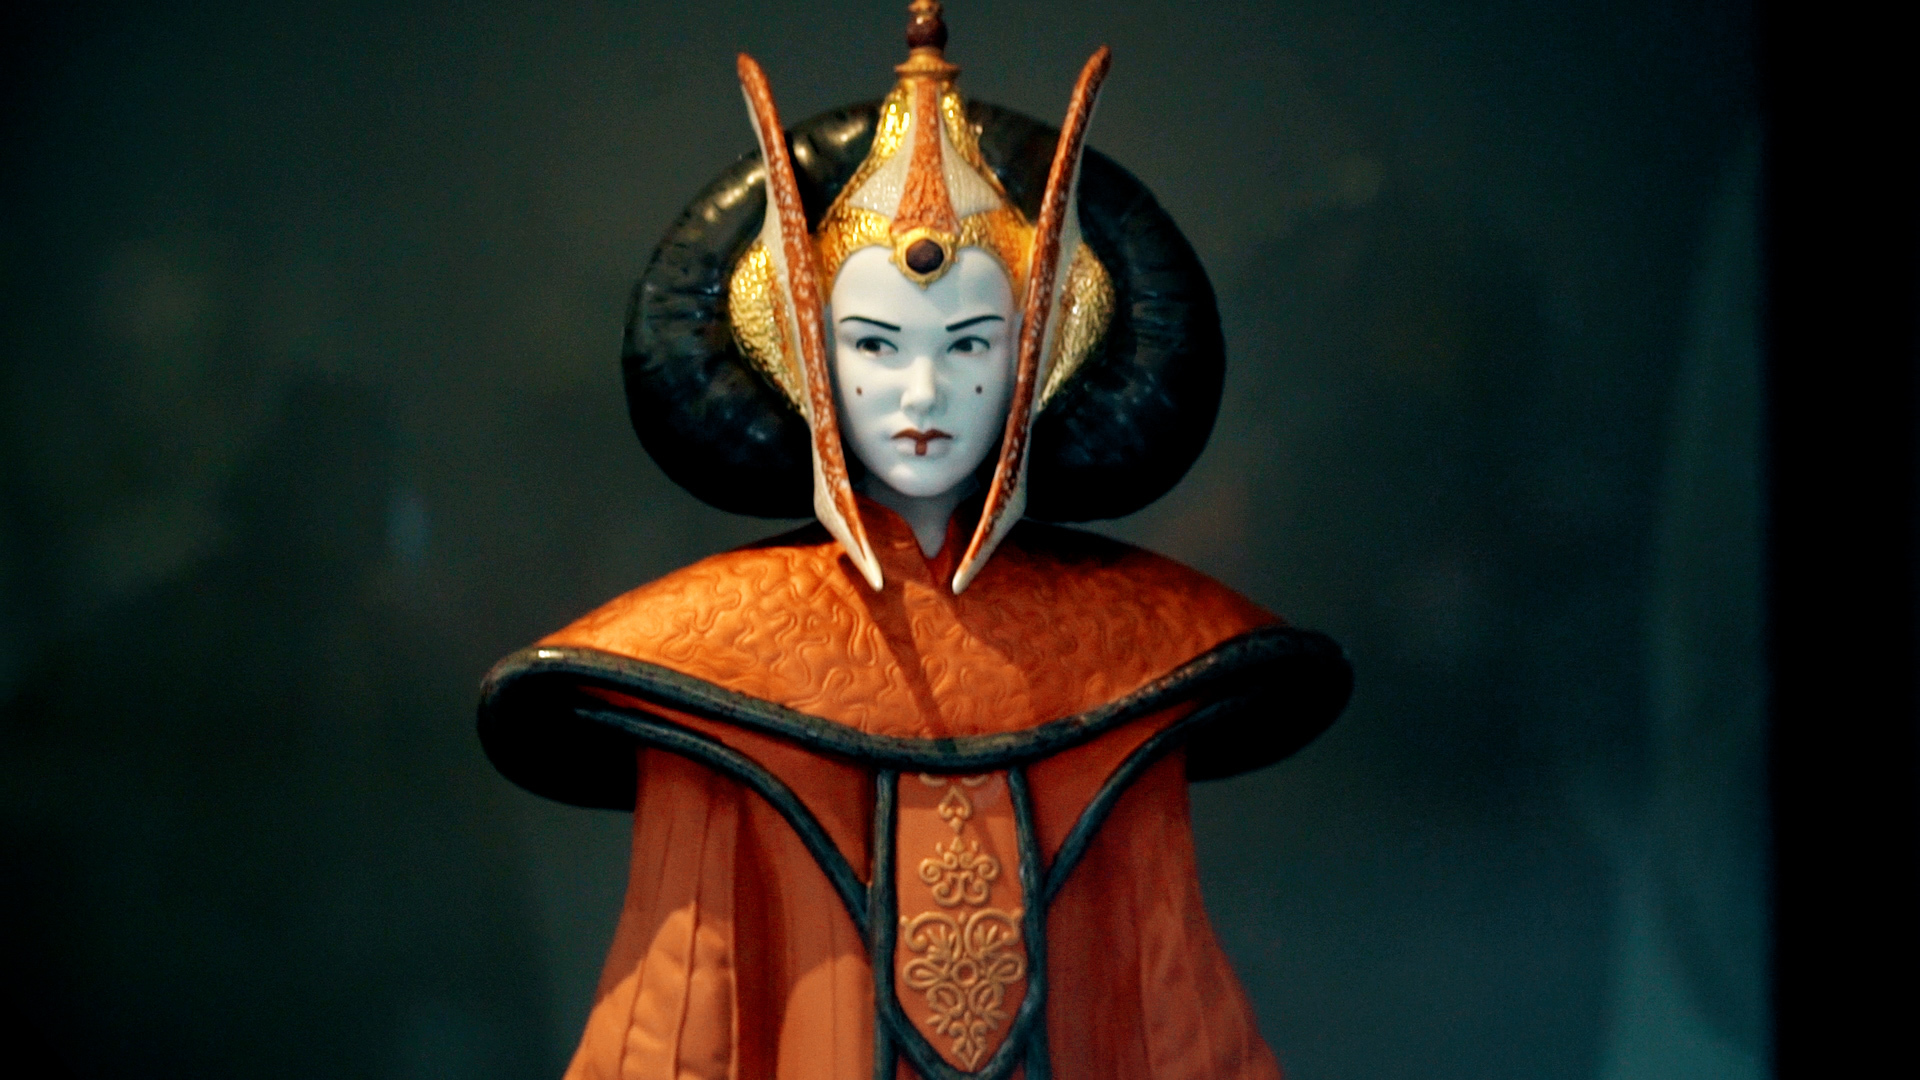 Figura hecha en porcelana por Lladró de la Reina Amidala.